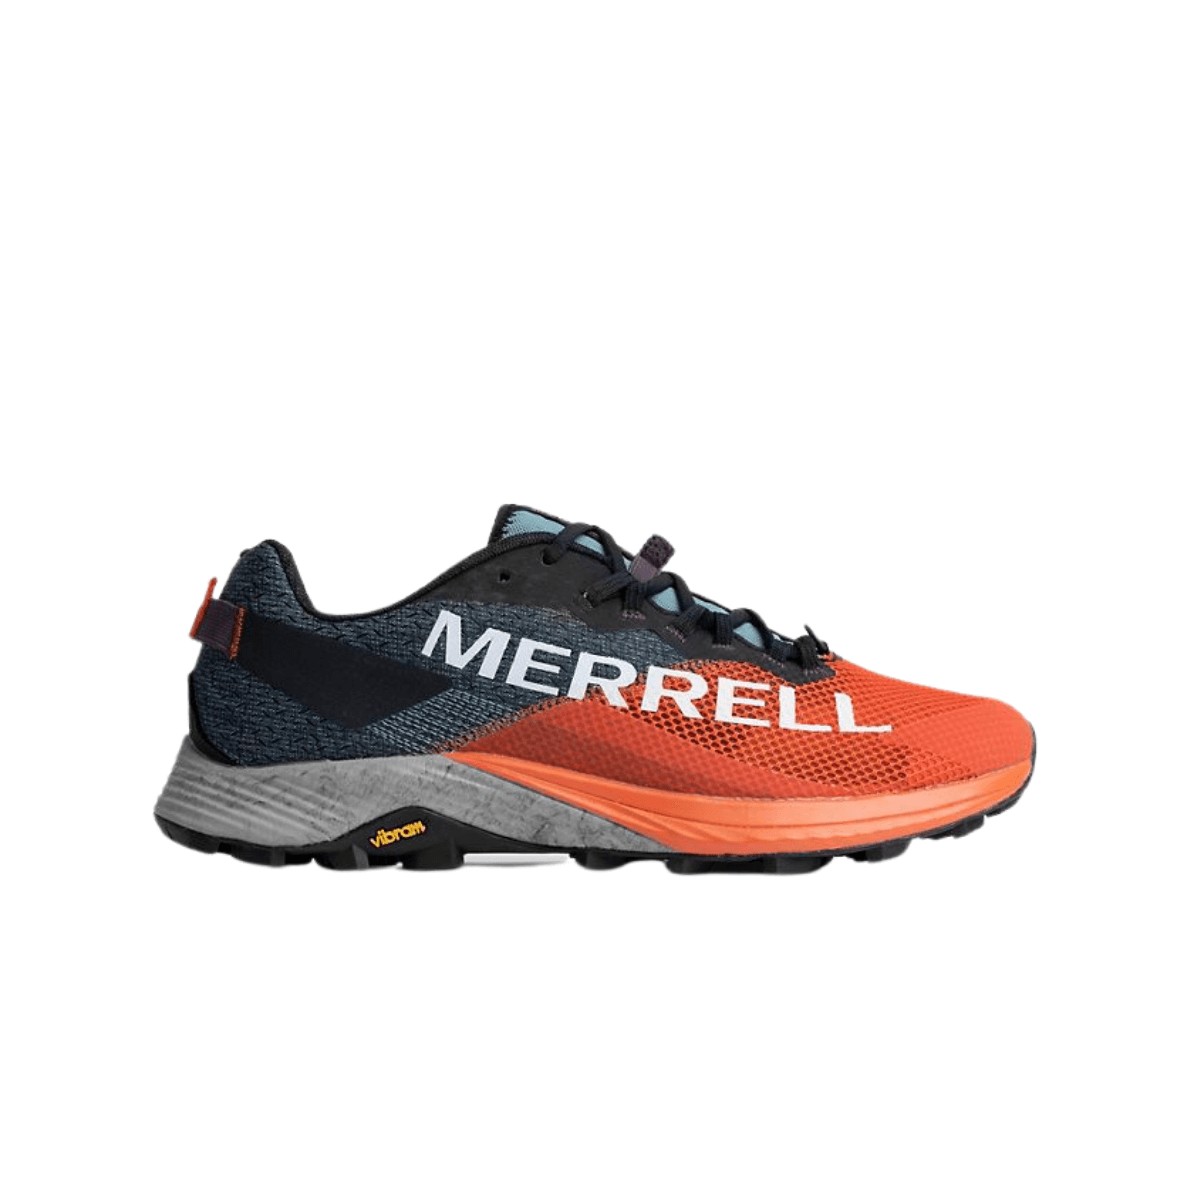 Chaussures Merrell MTL Long Sky 2 Noir Orange AW22, Taille 42 - EUR